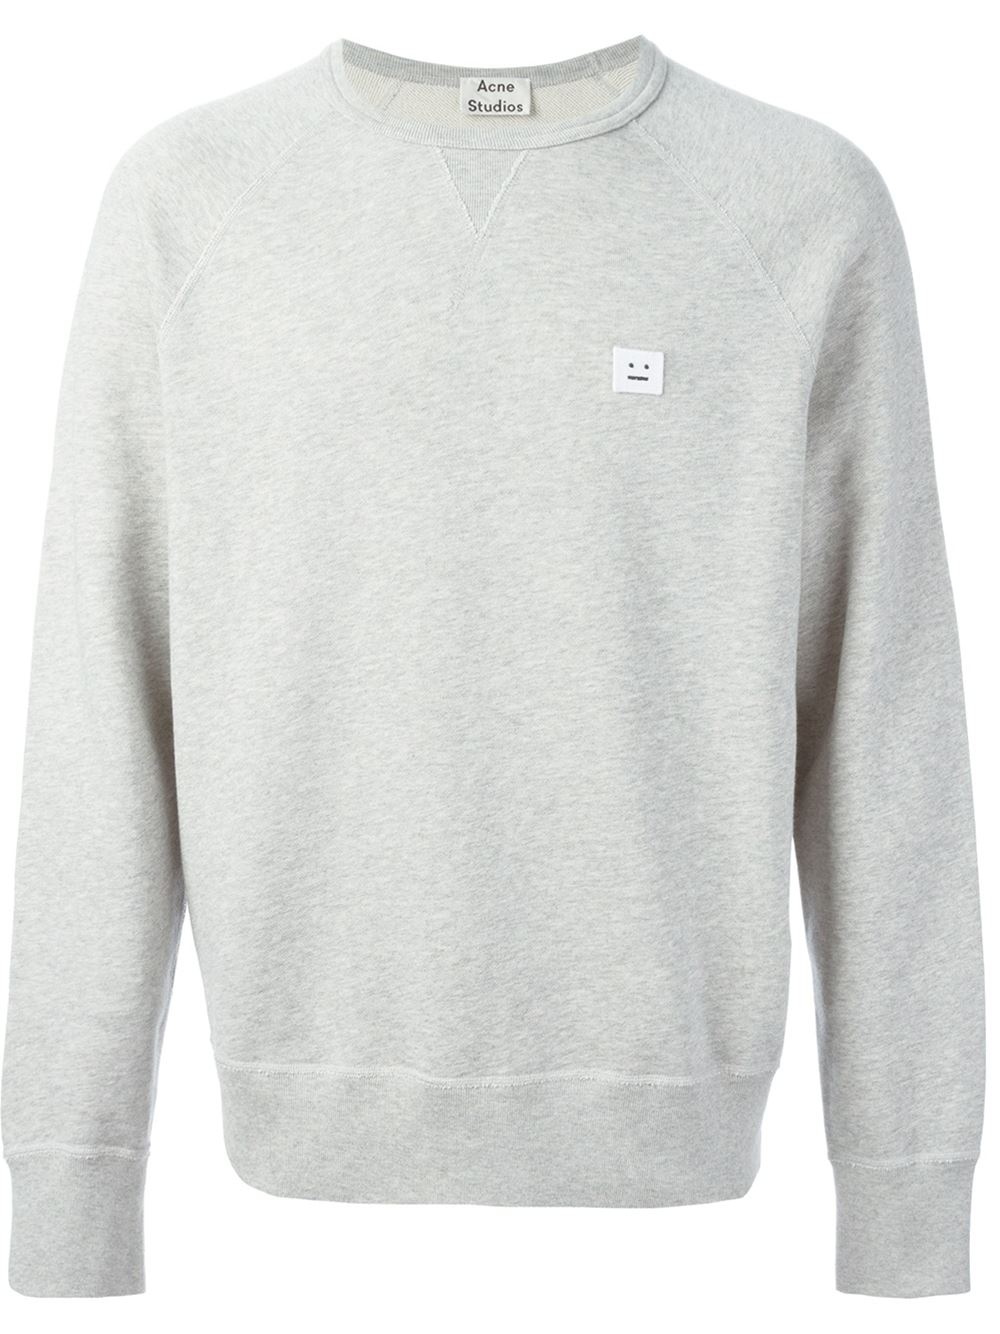 Acne Studios College Face Sweatshirt in Grey (Gray) for Men - Lyst